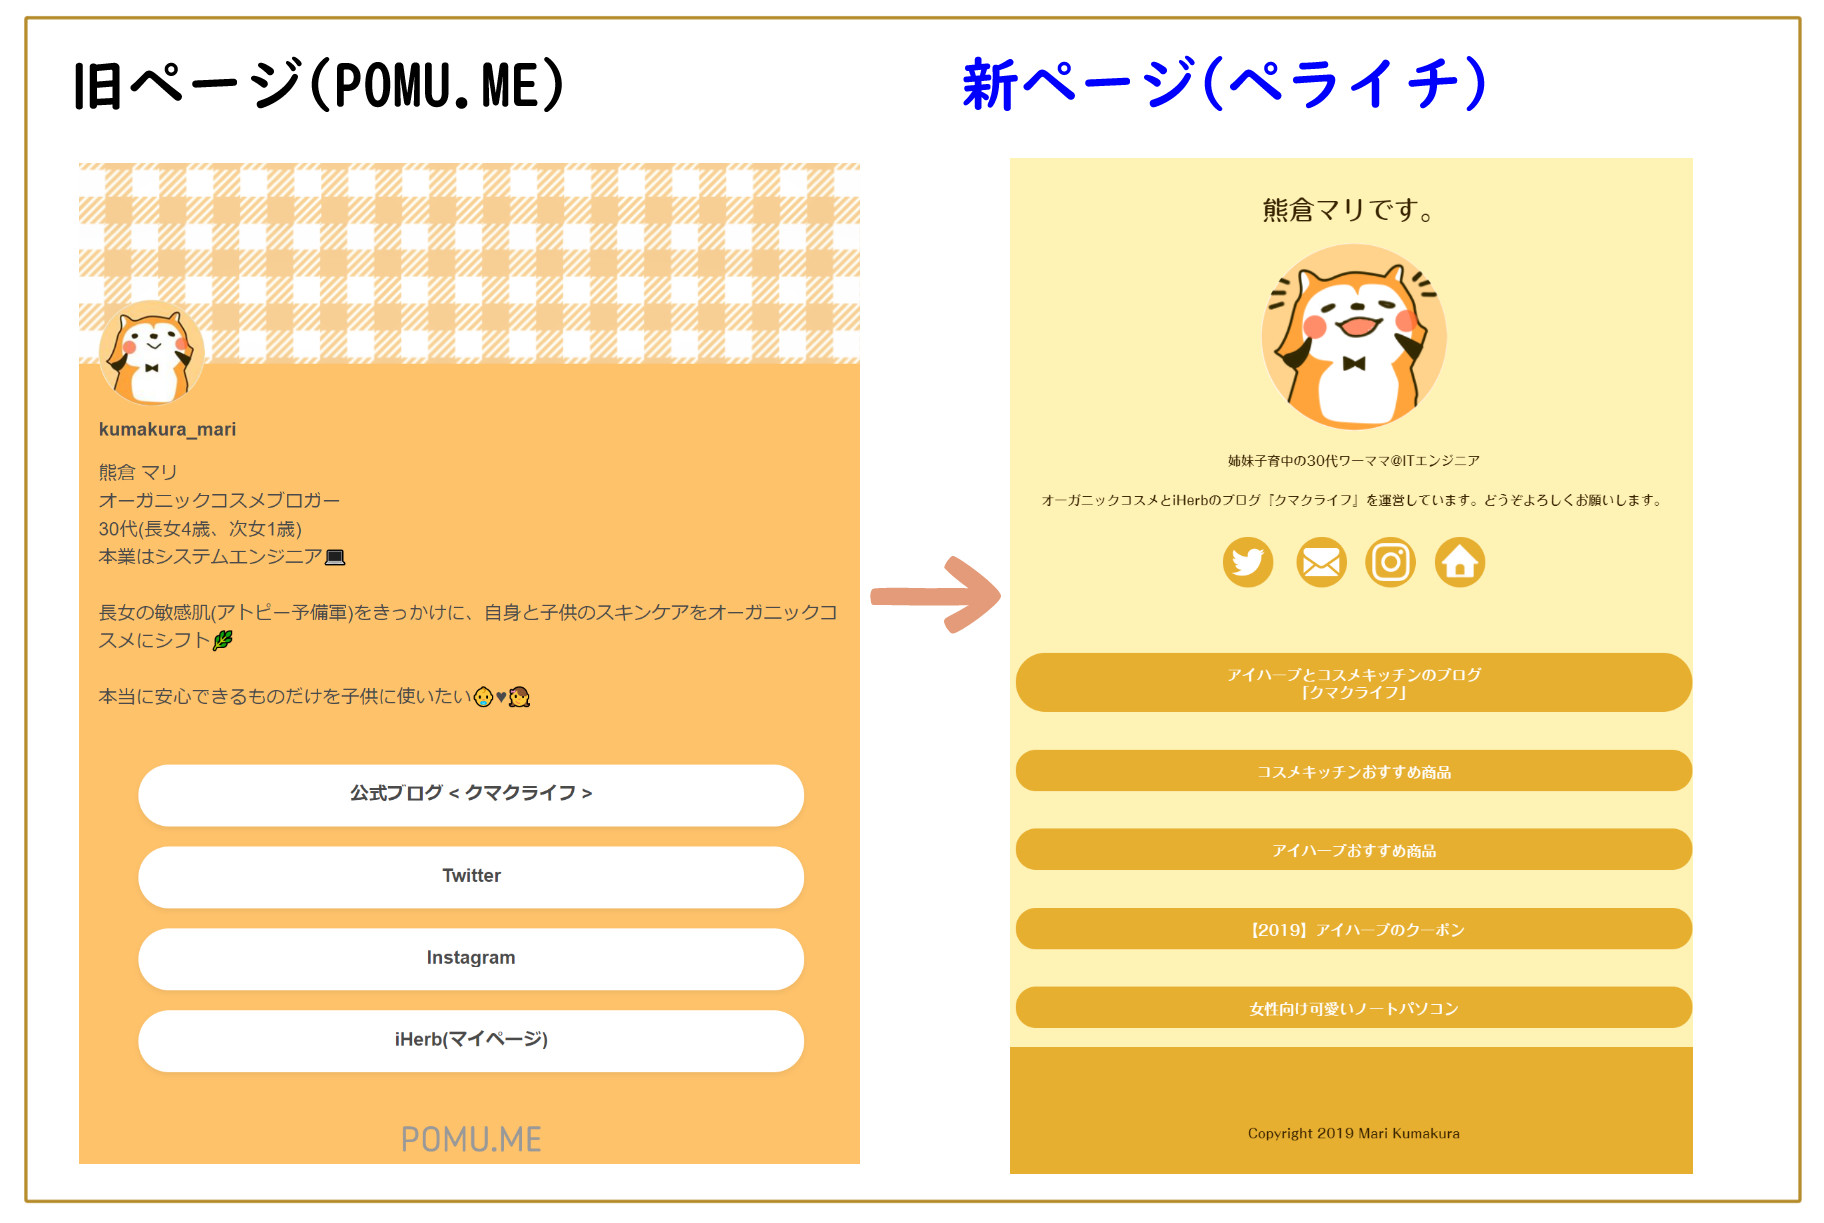 POMU.MEとペライチのプロフィールページ比較